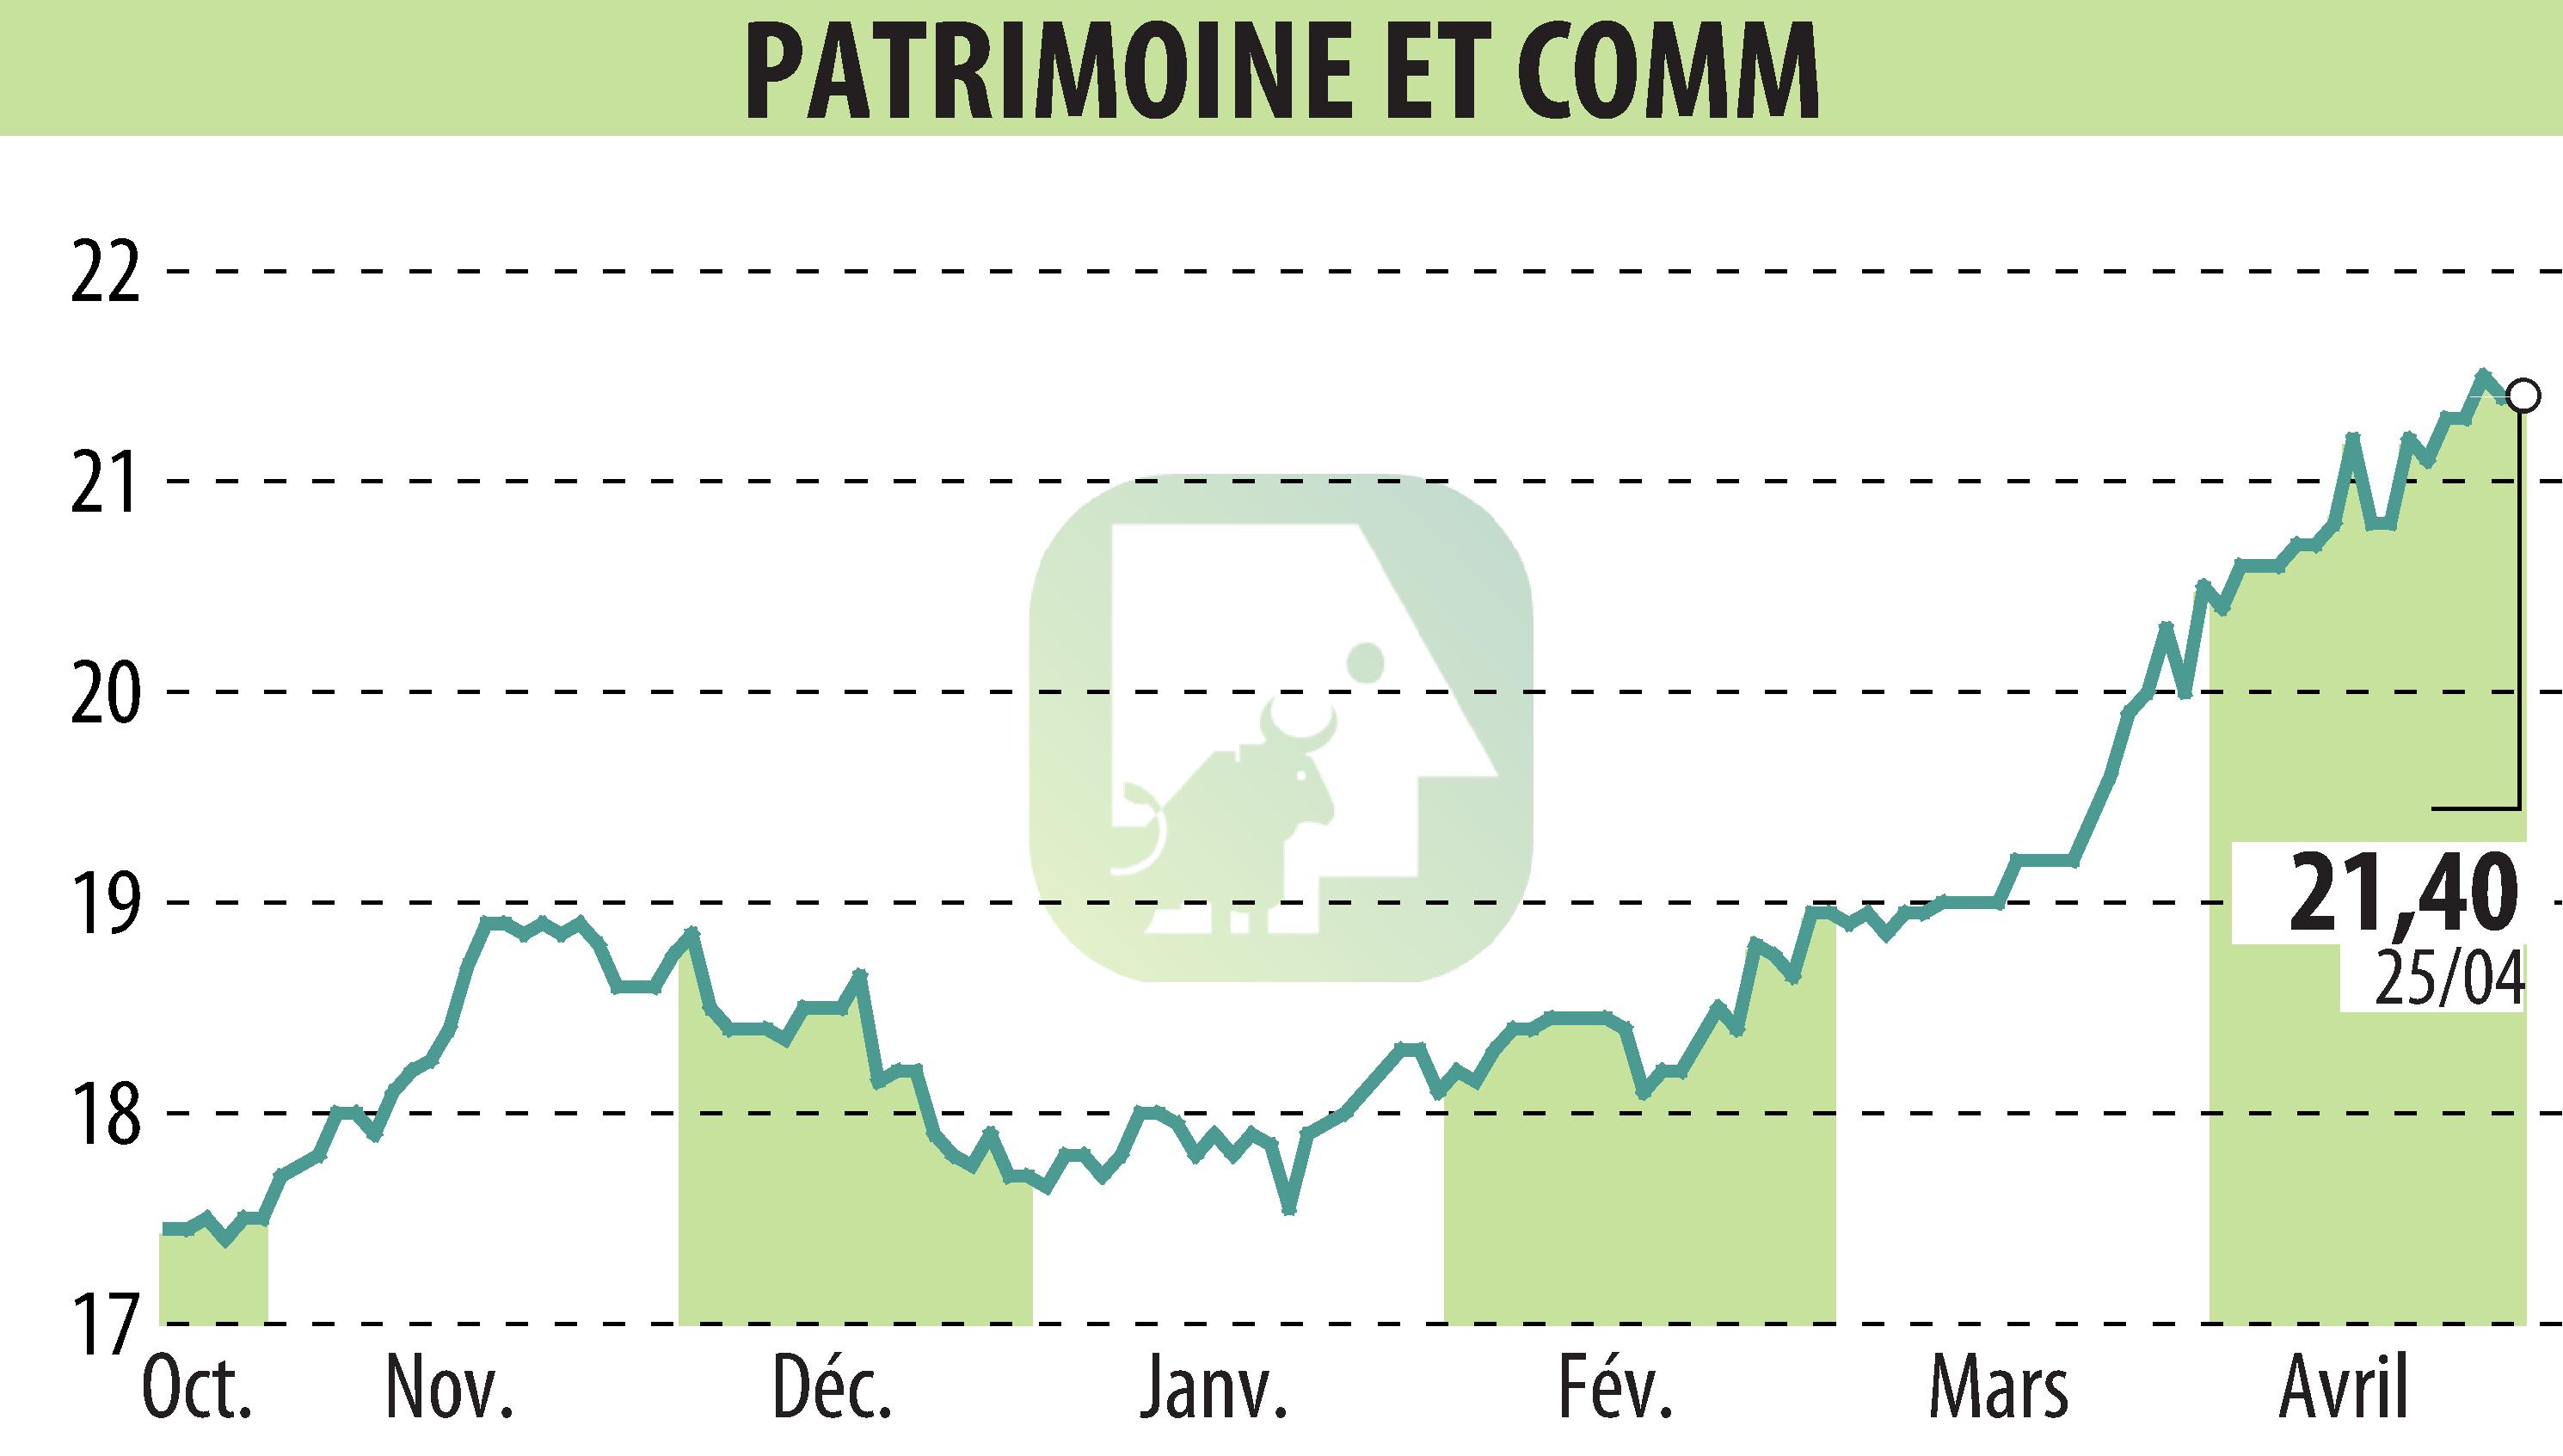 Stock price chart of PATRIMOINE ET COMMERCE  (EPA:PAT) showing fluctuations.